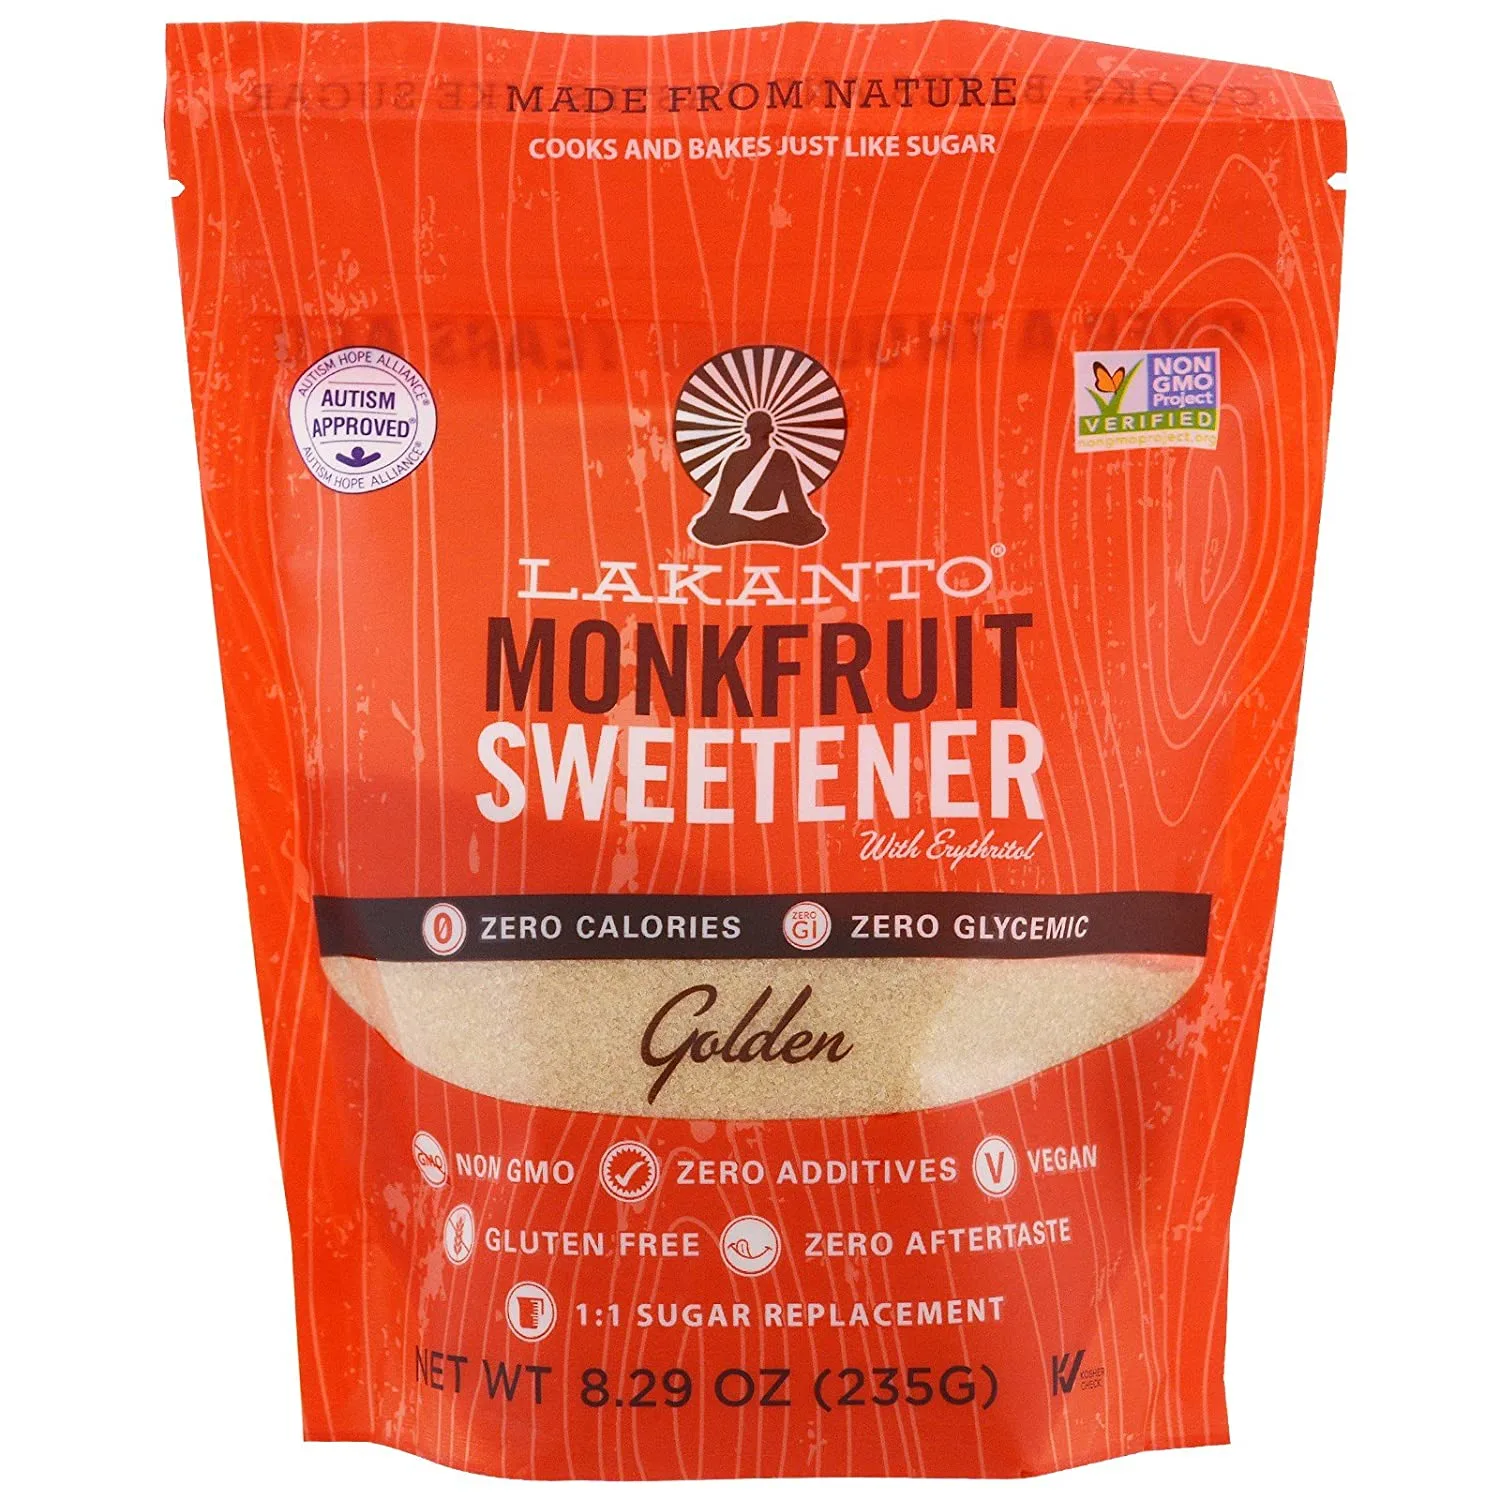 Lakanto Monkfruit Sweetener: Save 20% using promo code: pound20